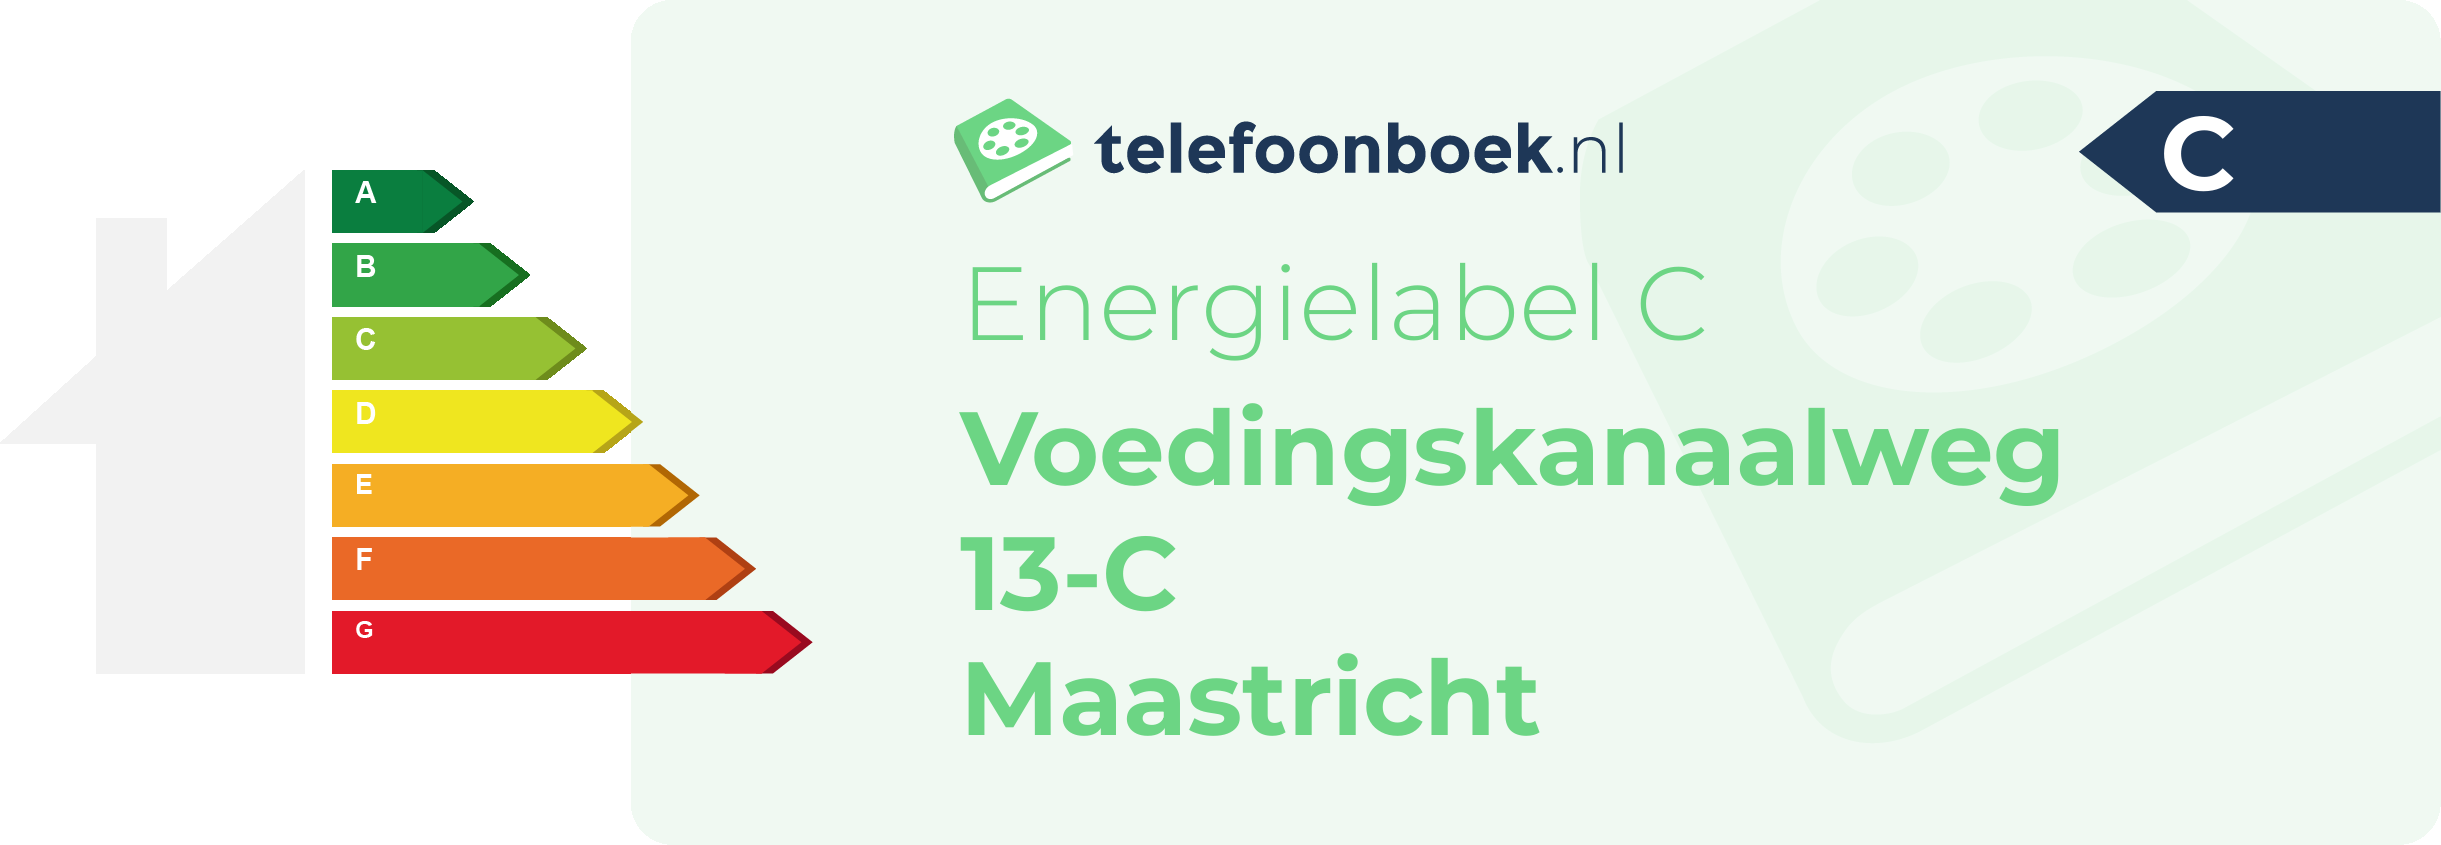 Energielabel Voedingskanaalweg 13-C Maastricht